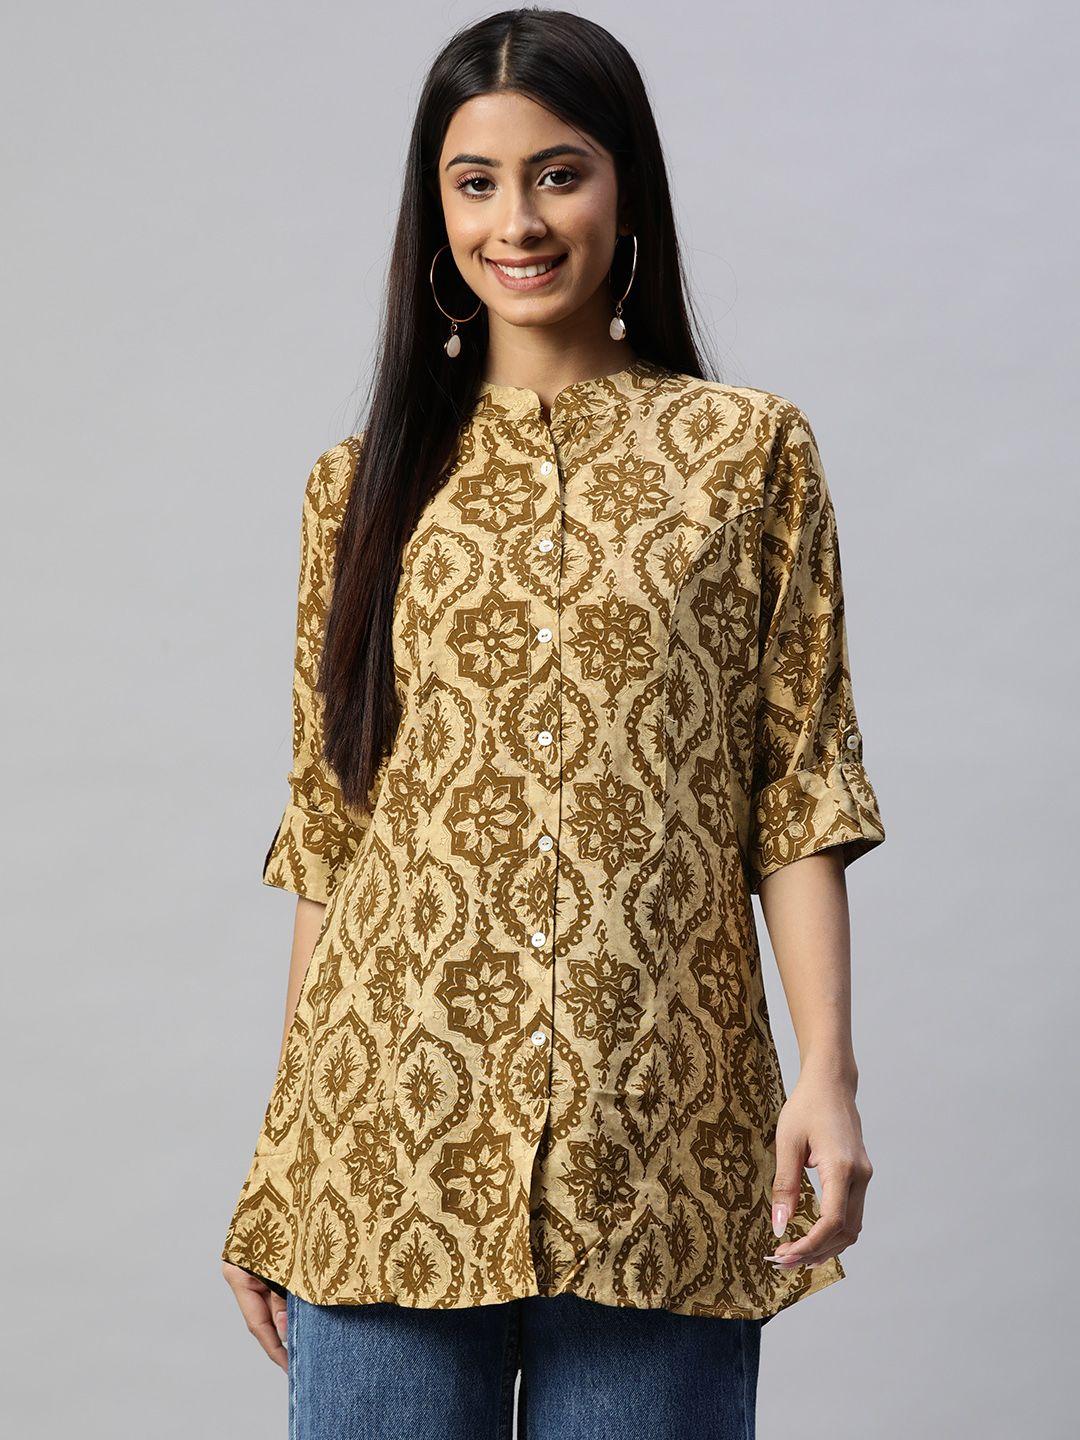 divena women beige & brown printed shirt style top